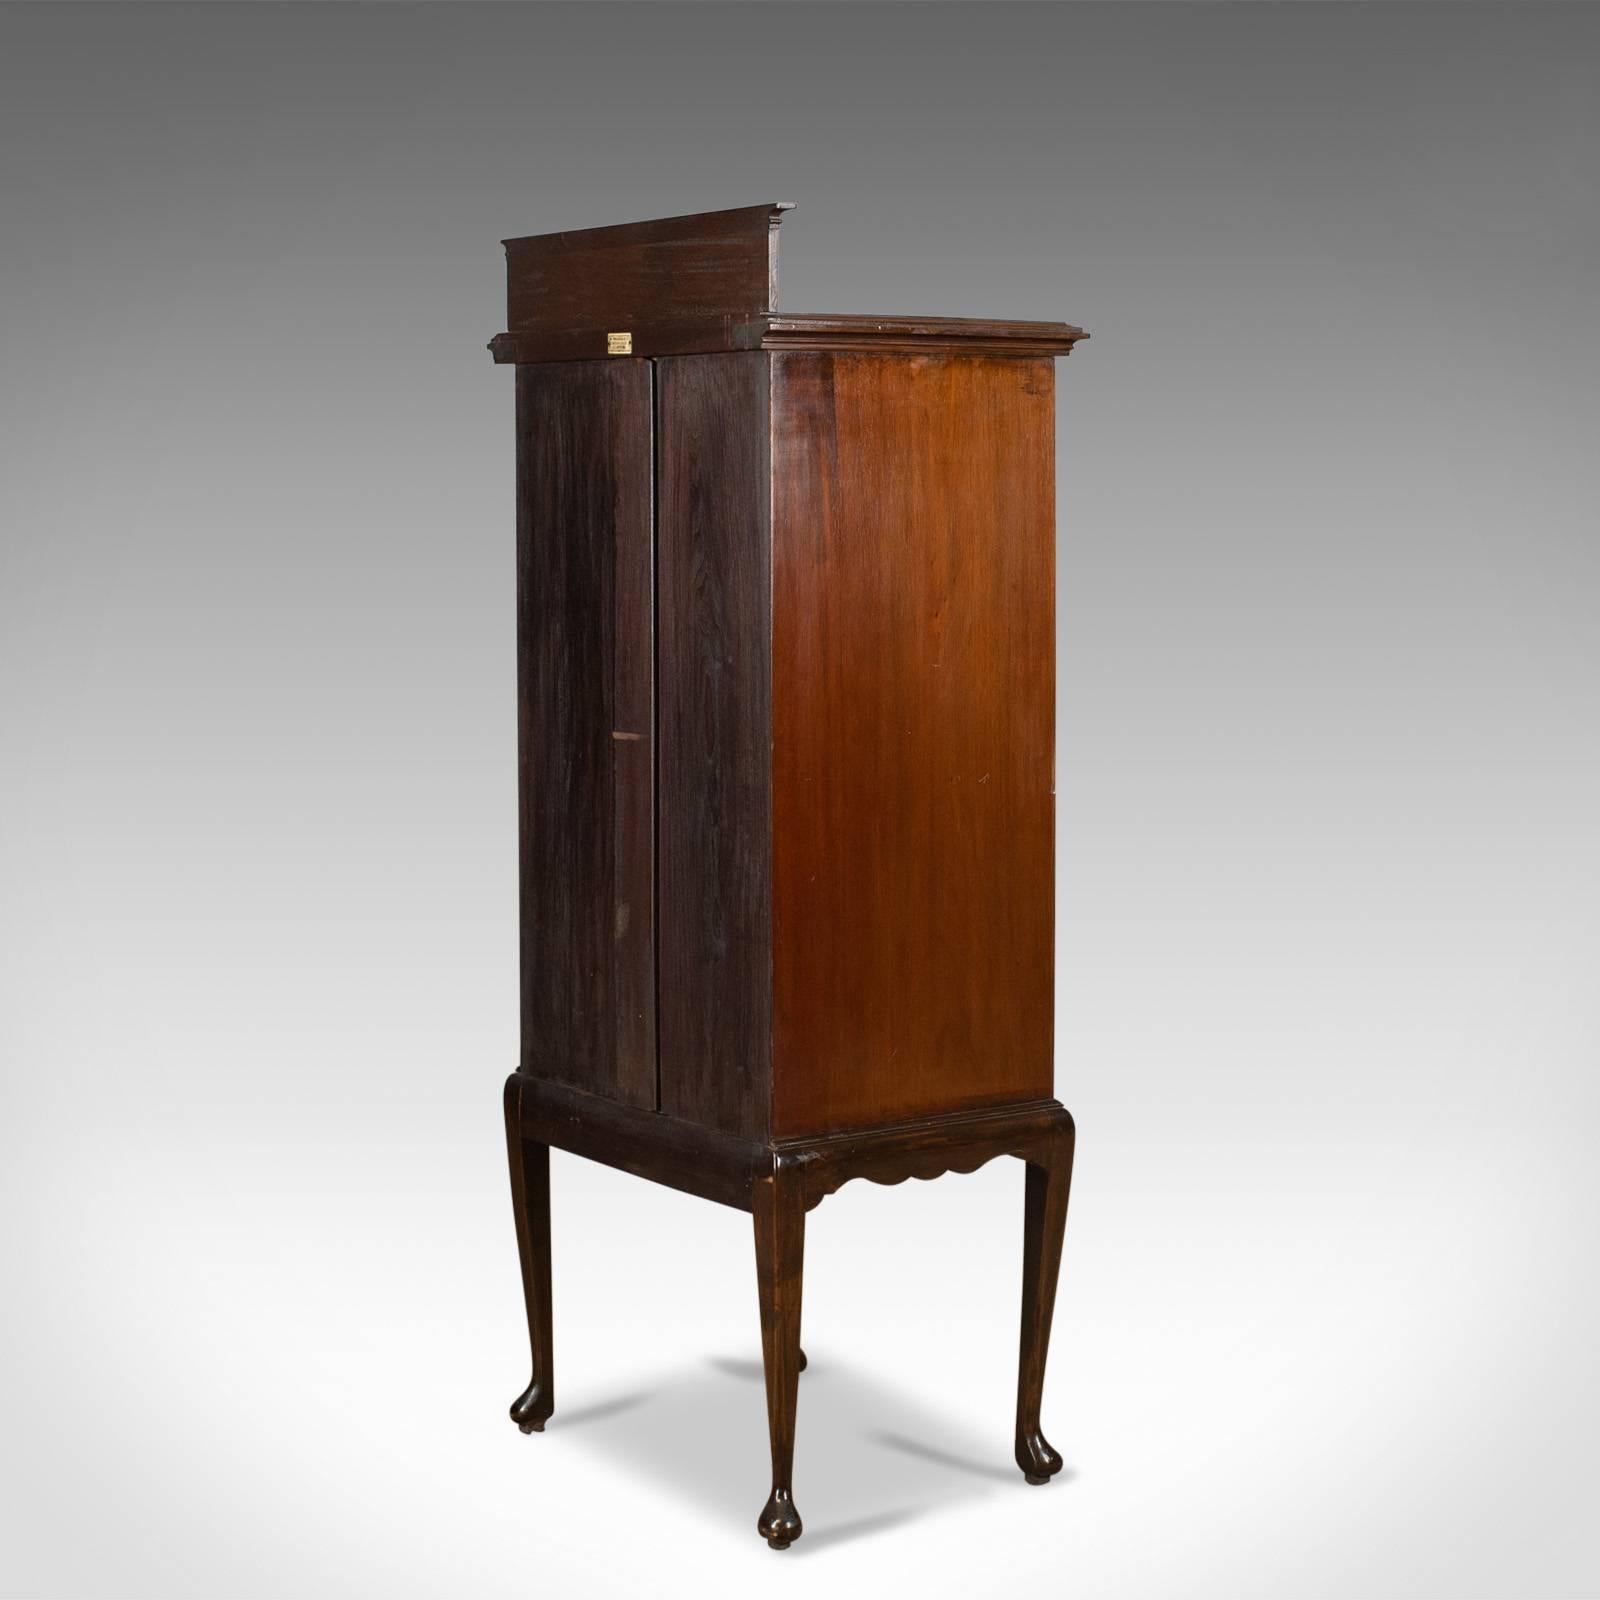 English Antique Music Cabinet, Maggs & Co, Clifton, Edwardian, Mahogany, circa 1910